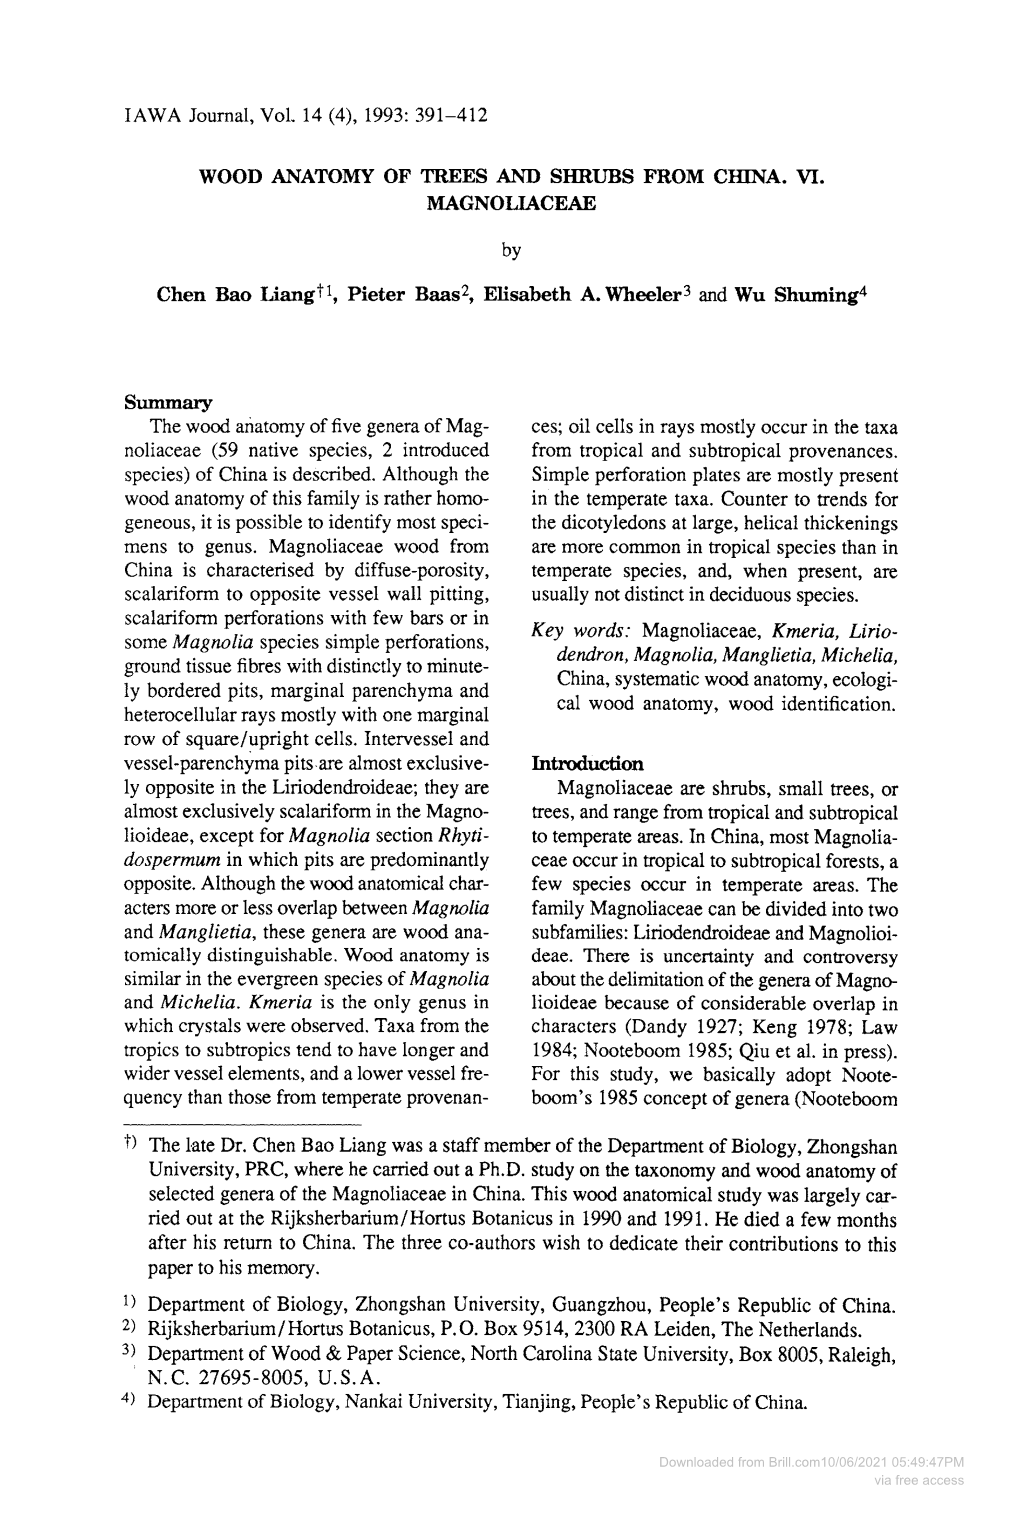 IAWA Journal, Vol 14 (4), 1993: 391-412 WOOD ANATOMY OF